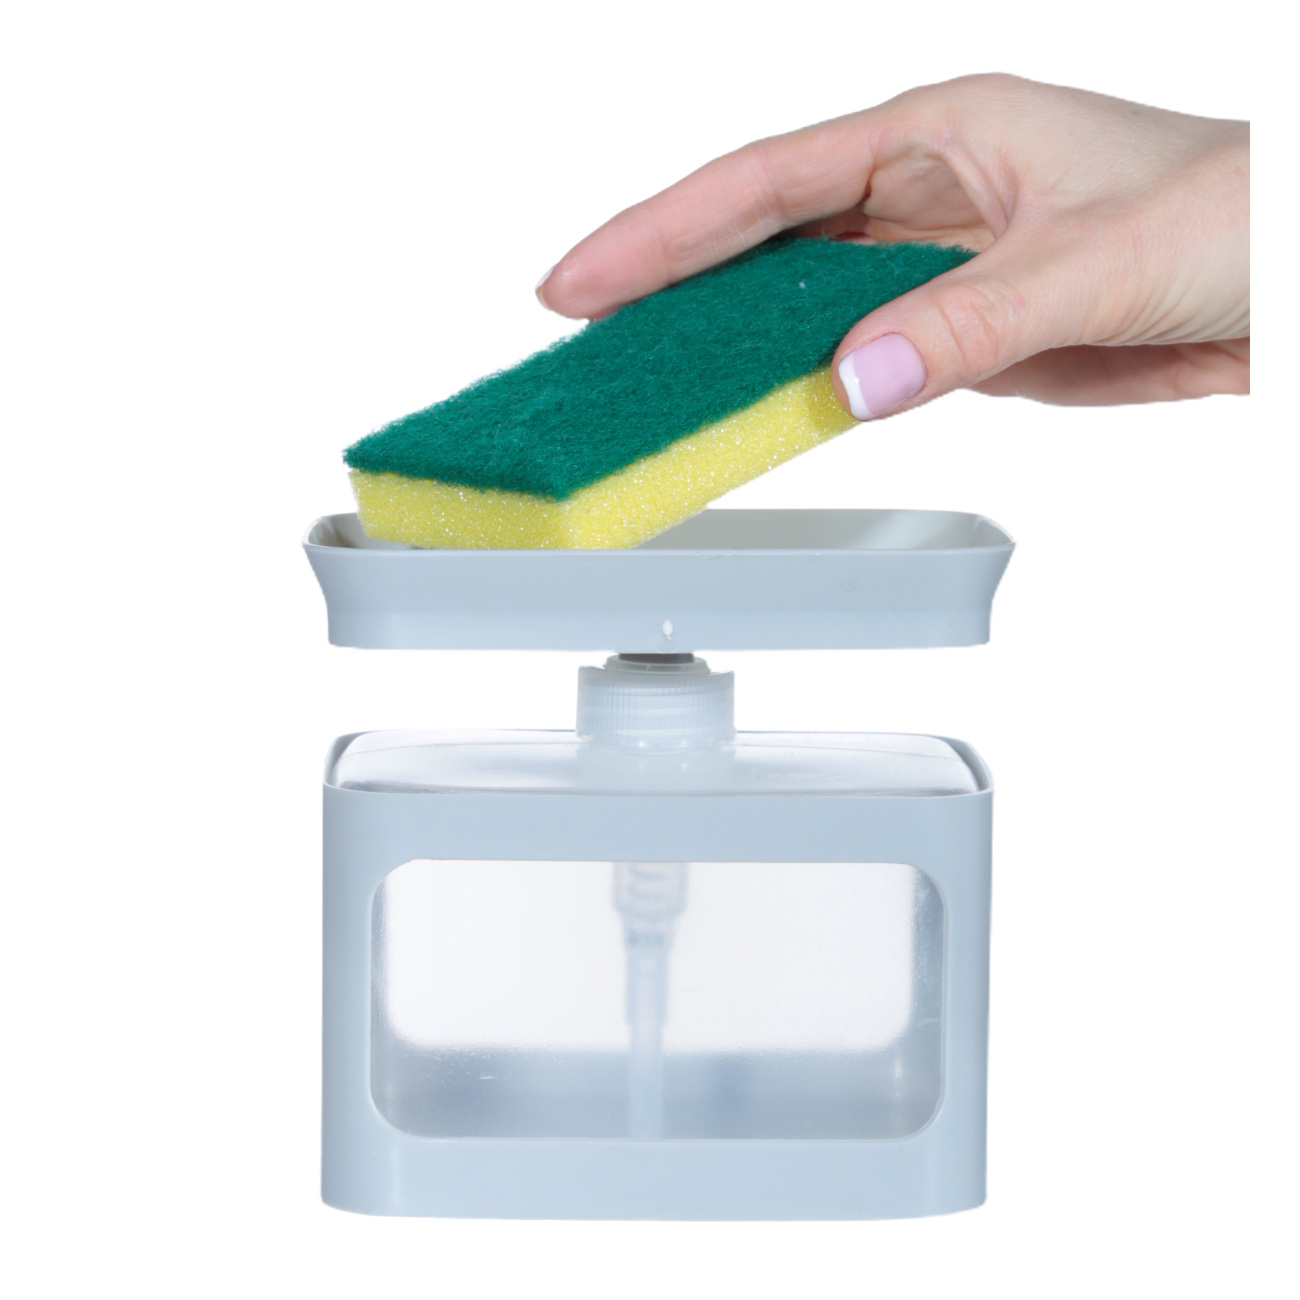 Detergent dispenser, 680 ml, with sponge, Platform, Plastic, Grey, Keeping изображение № 5